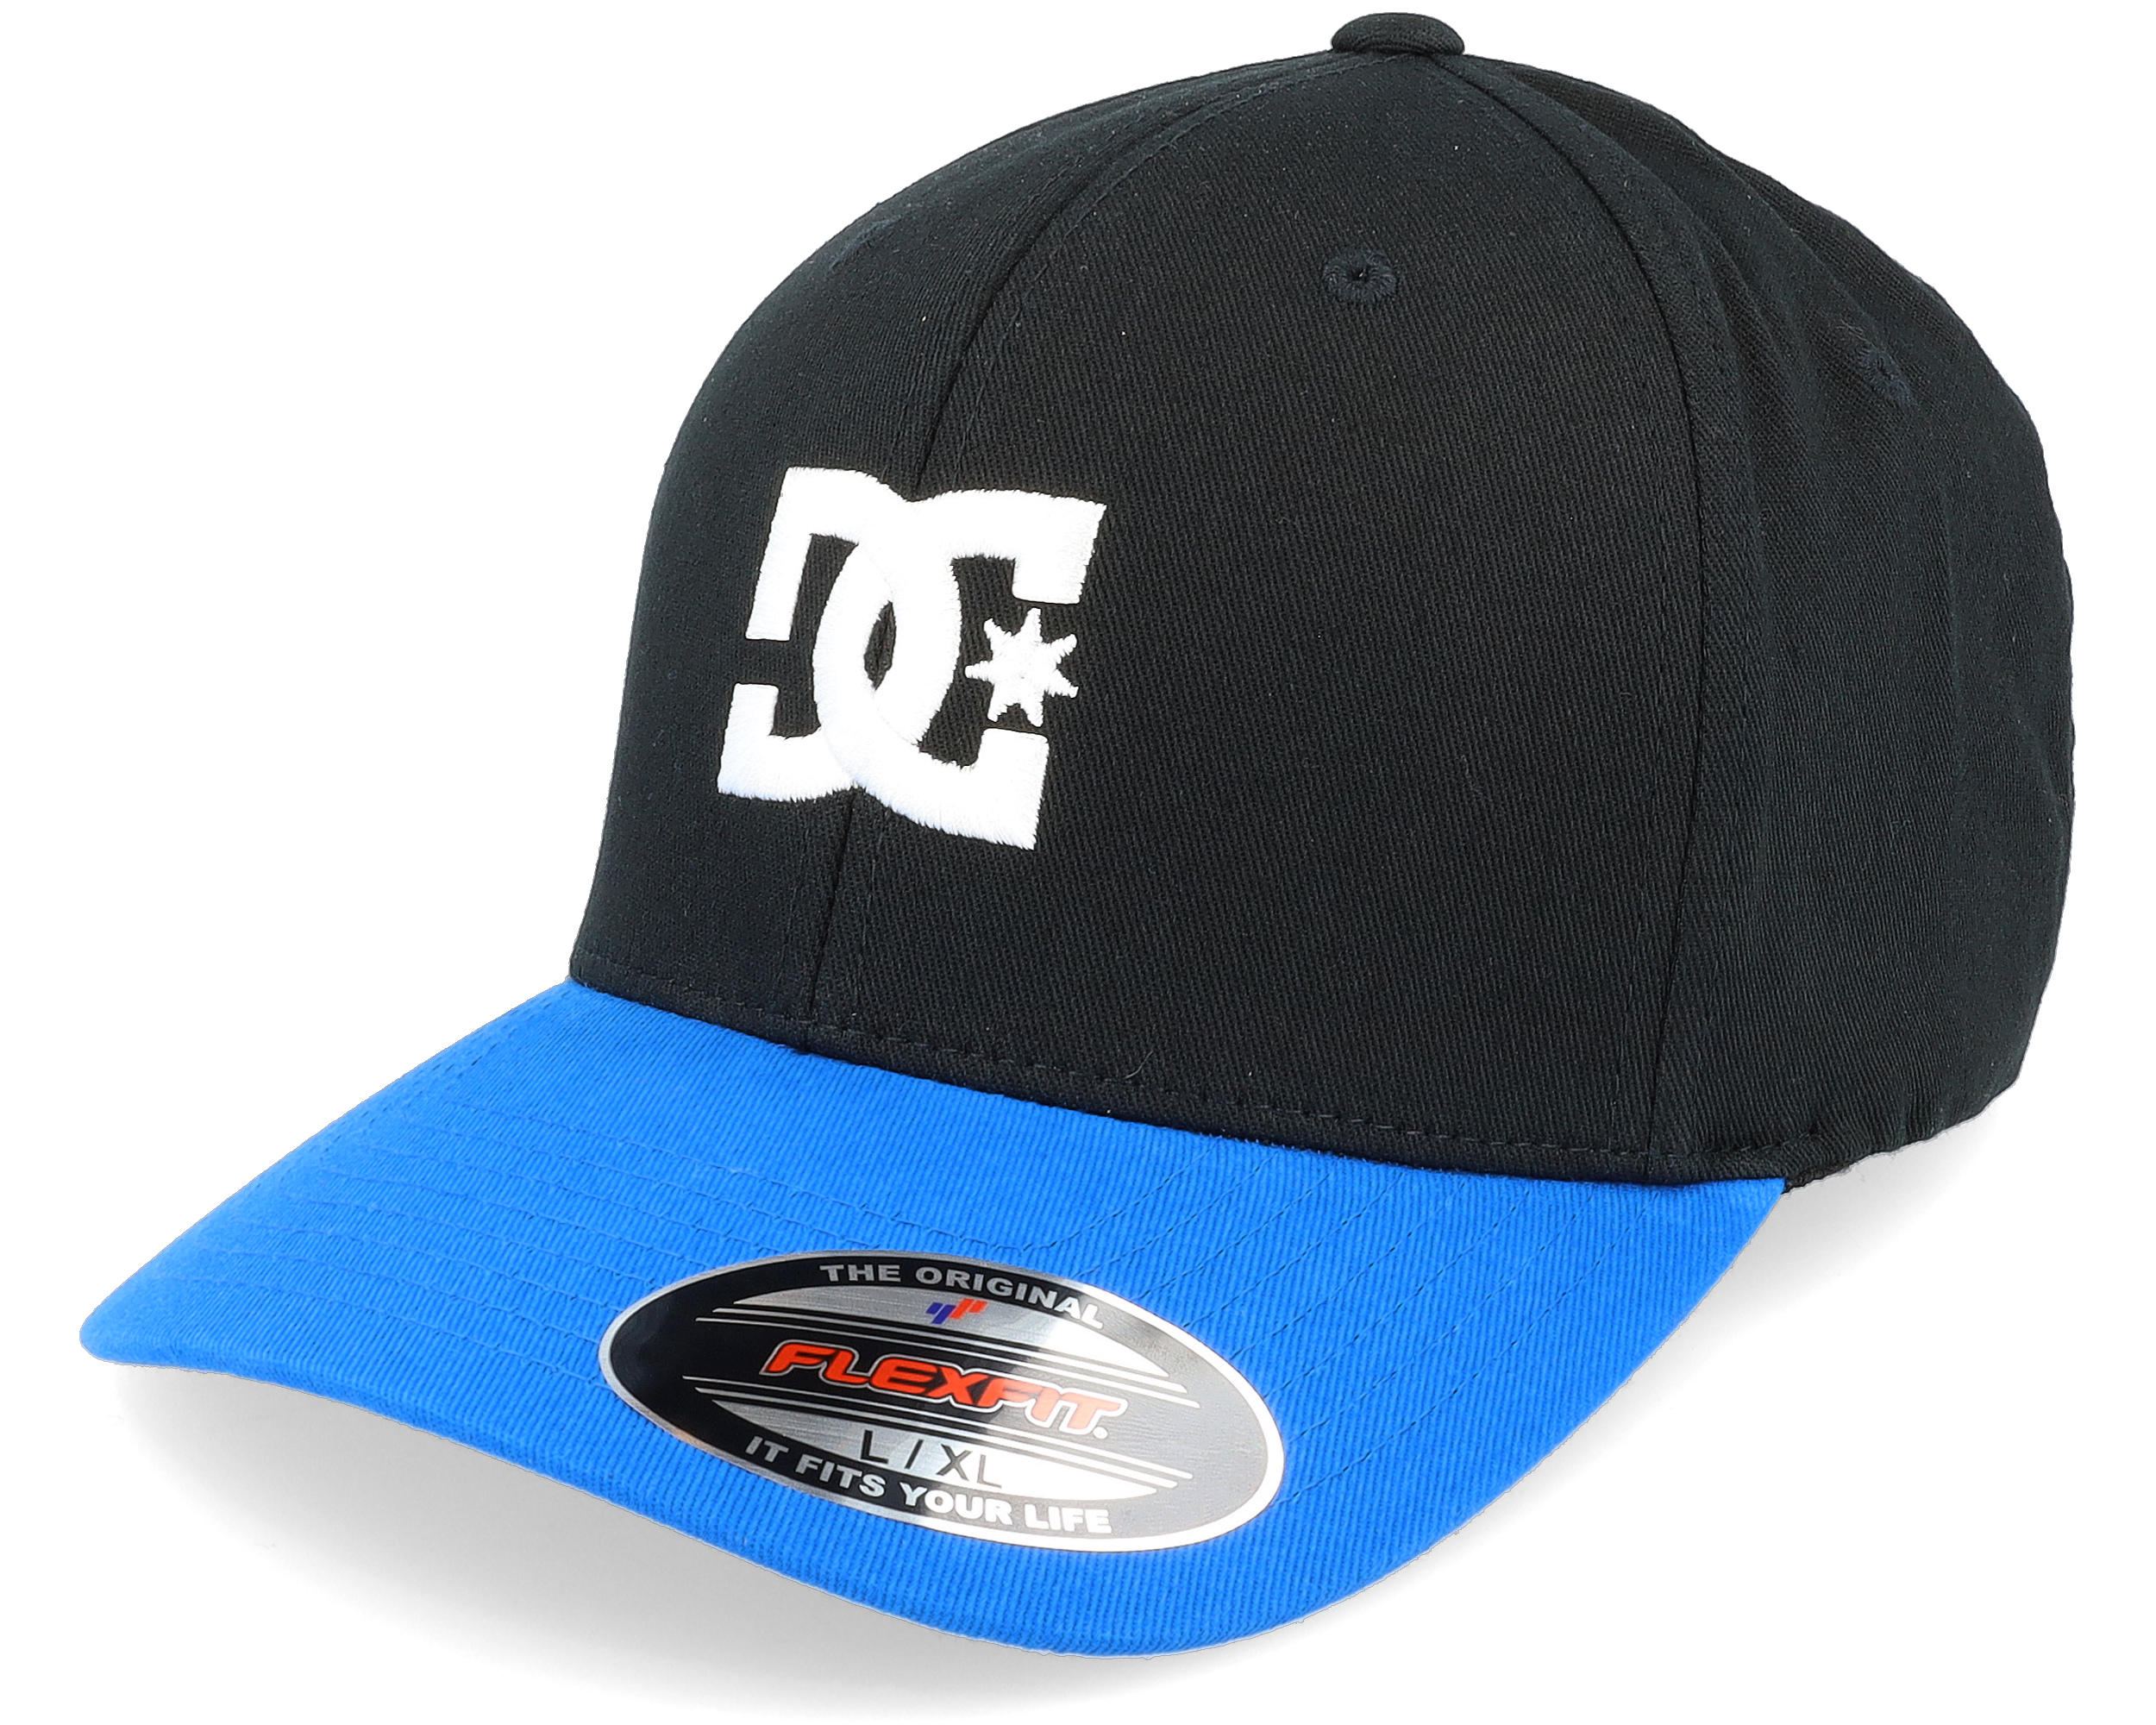 Cap Star Seasonal Black/Nautical Blue - Flexfit DC cap